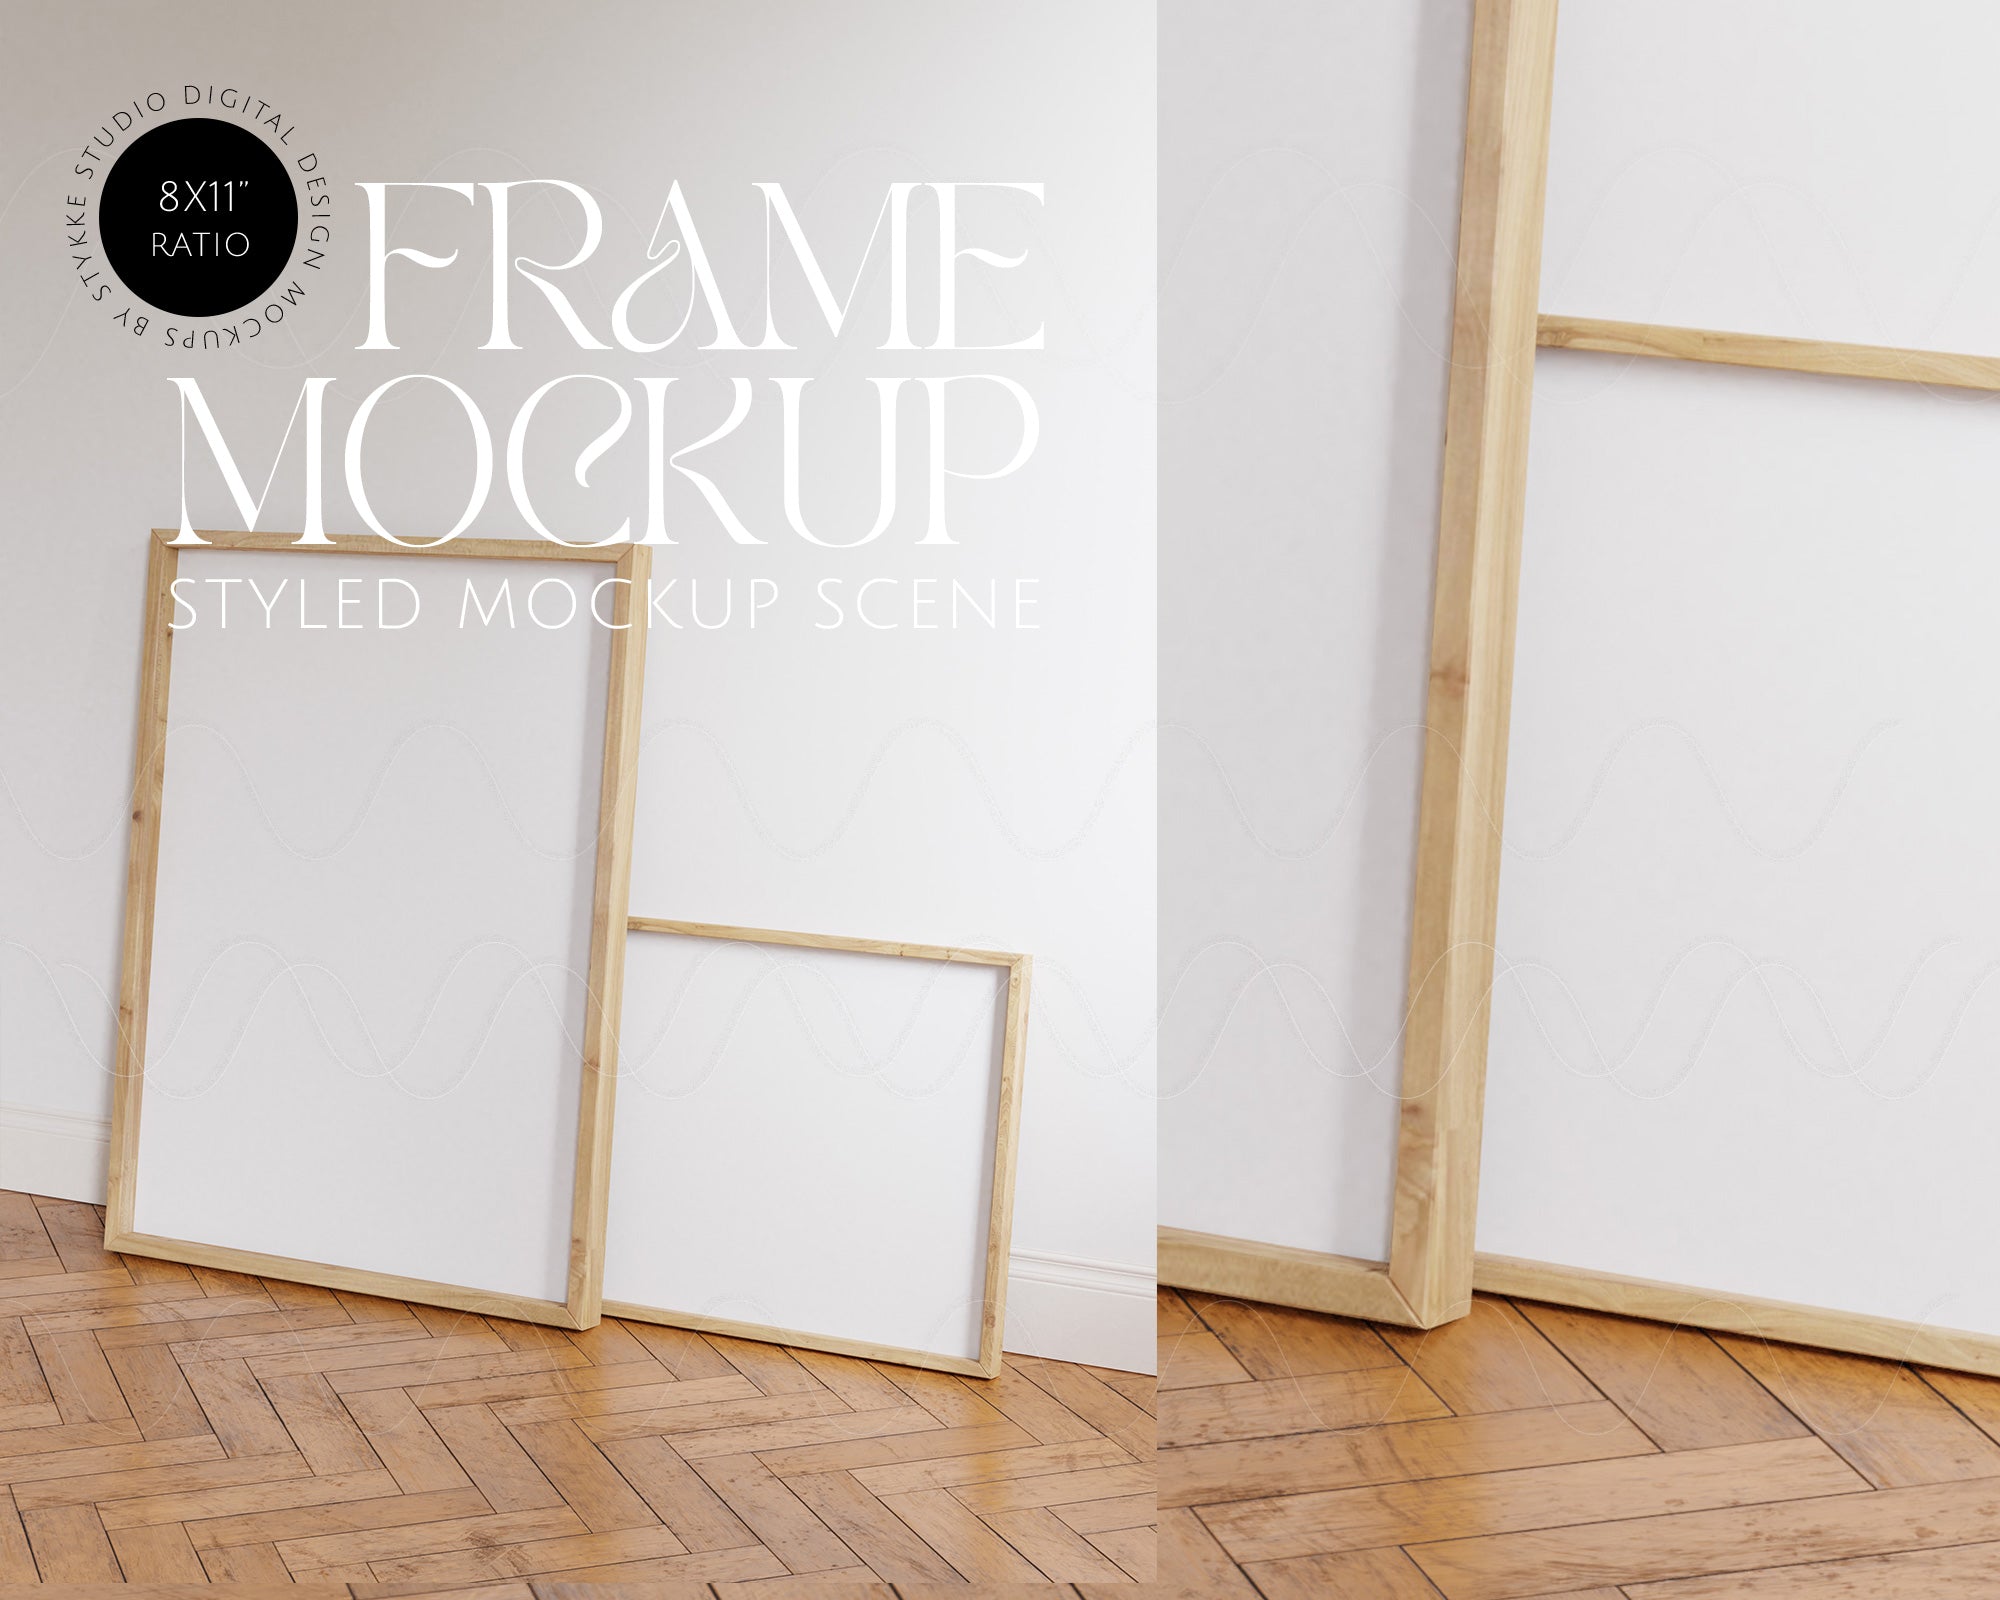 Gallery Chair 10 | 2 Frame Single Mockup